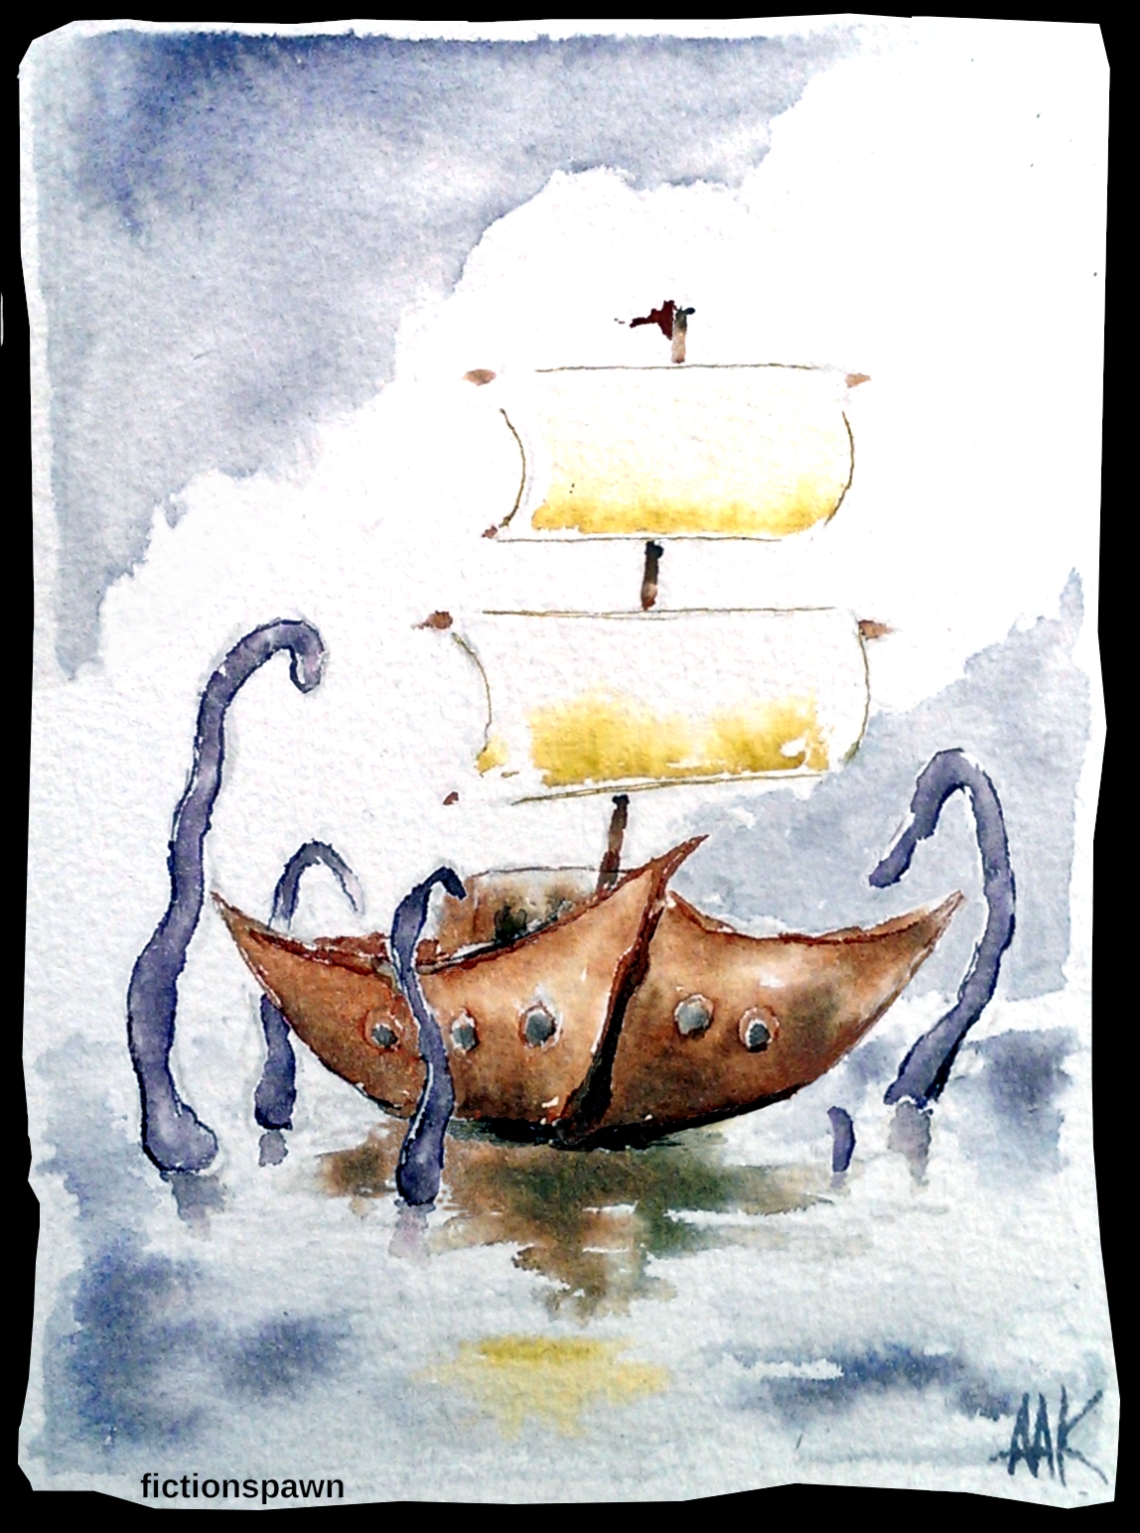 Tentacles attacking a sailboat Aak fictionspawn